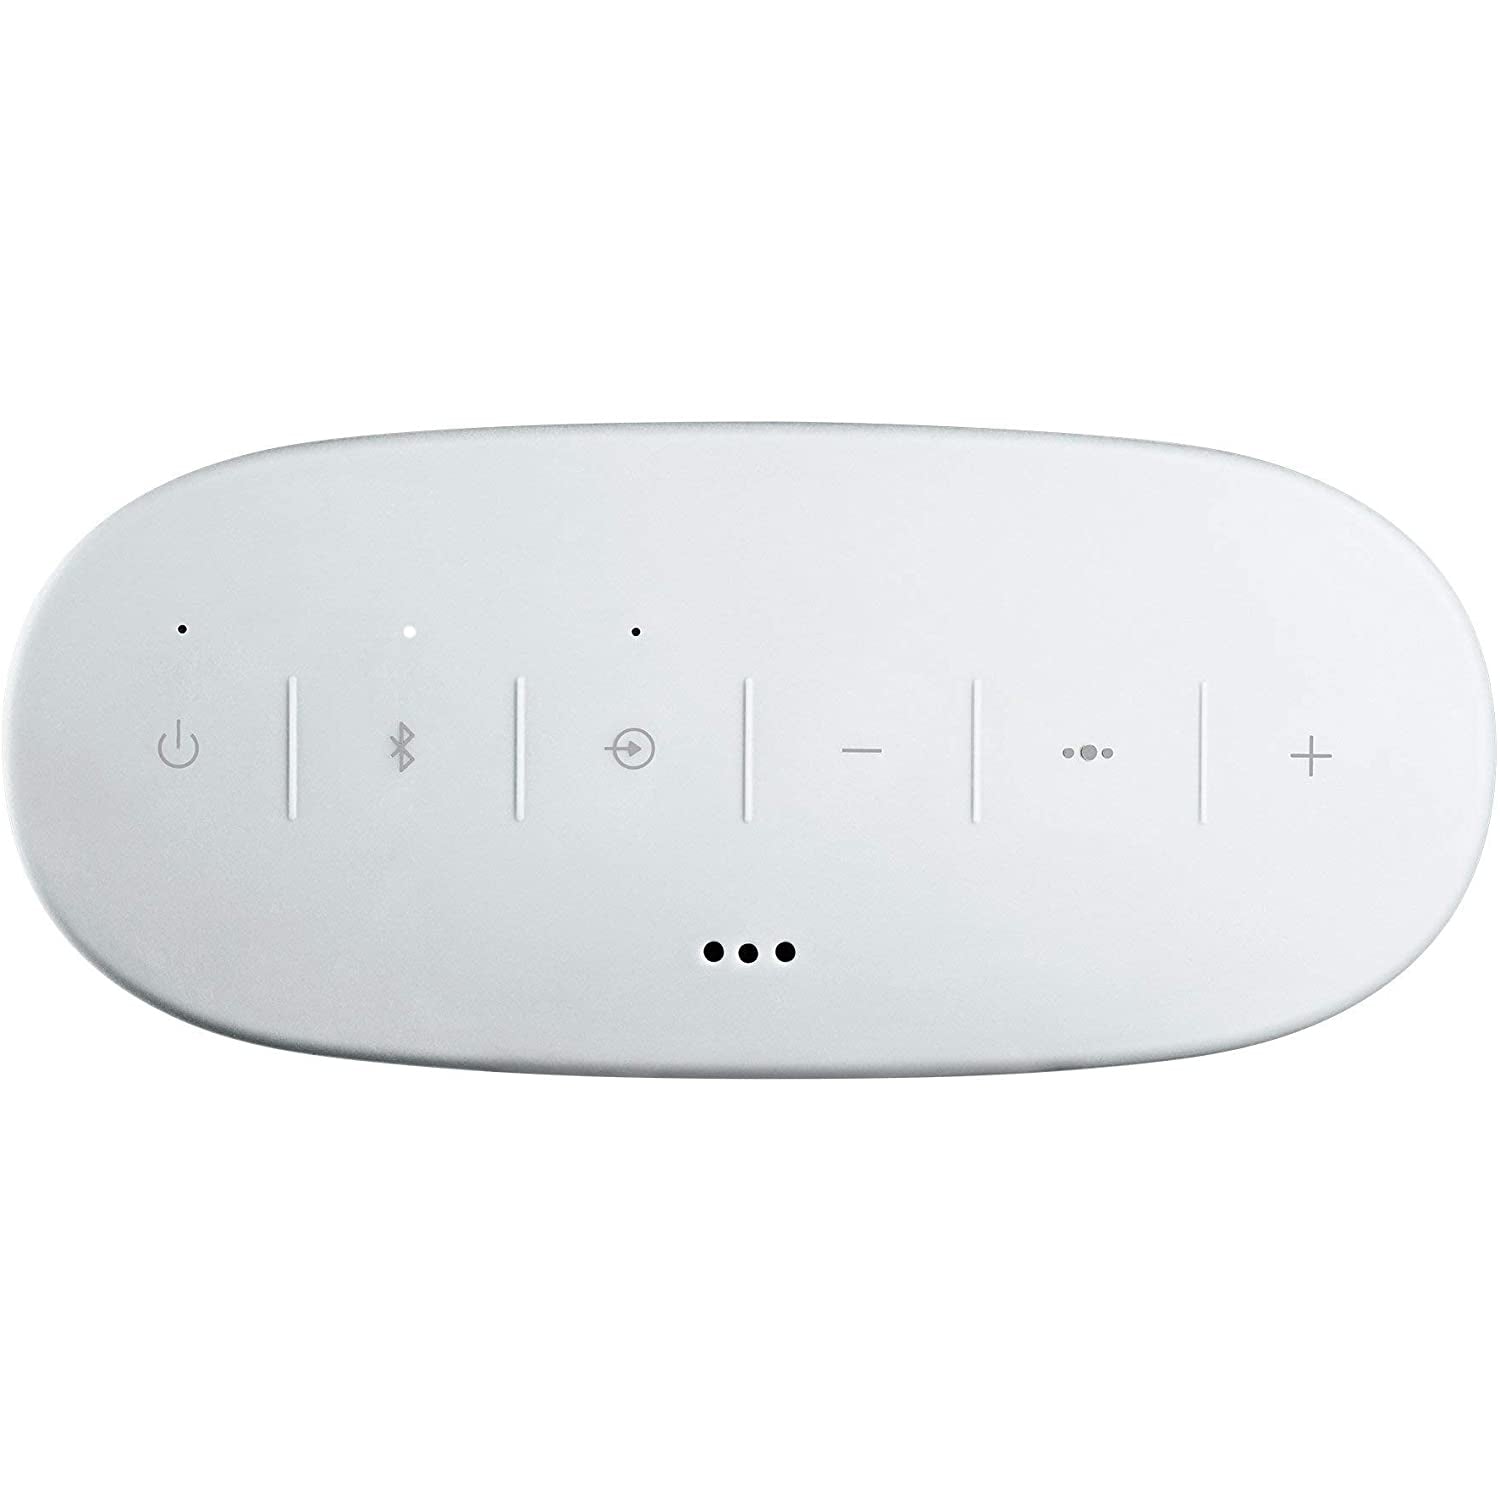 Bose SoundLink Color II Bluetooth Speaker, White | Stock Must Go